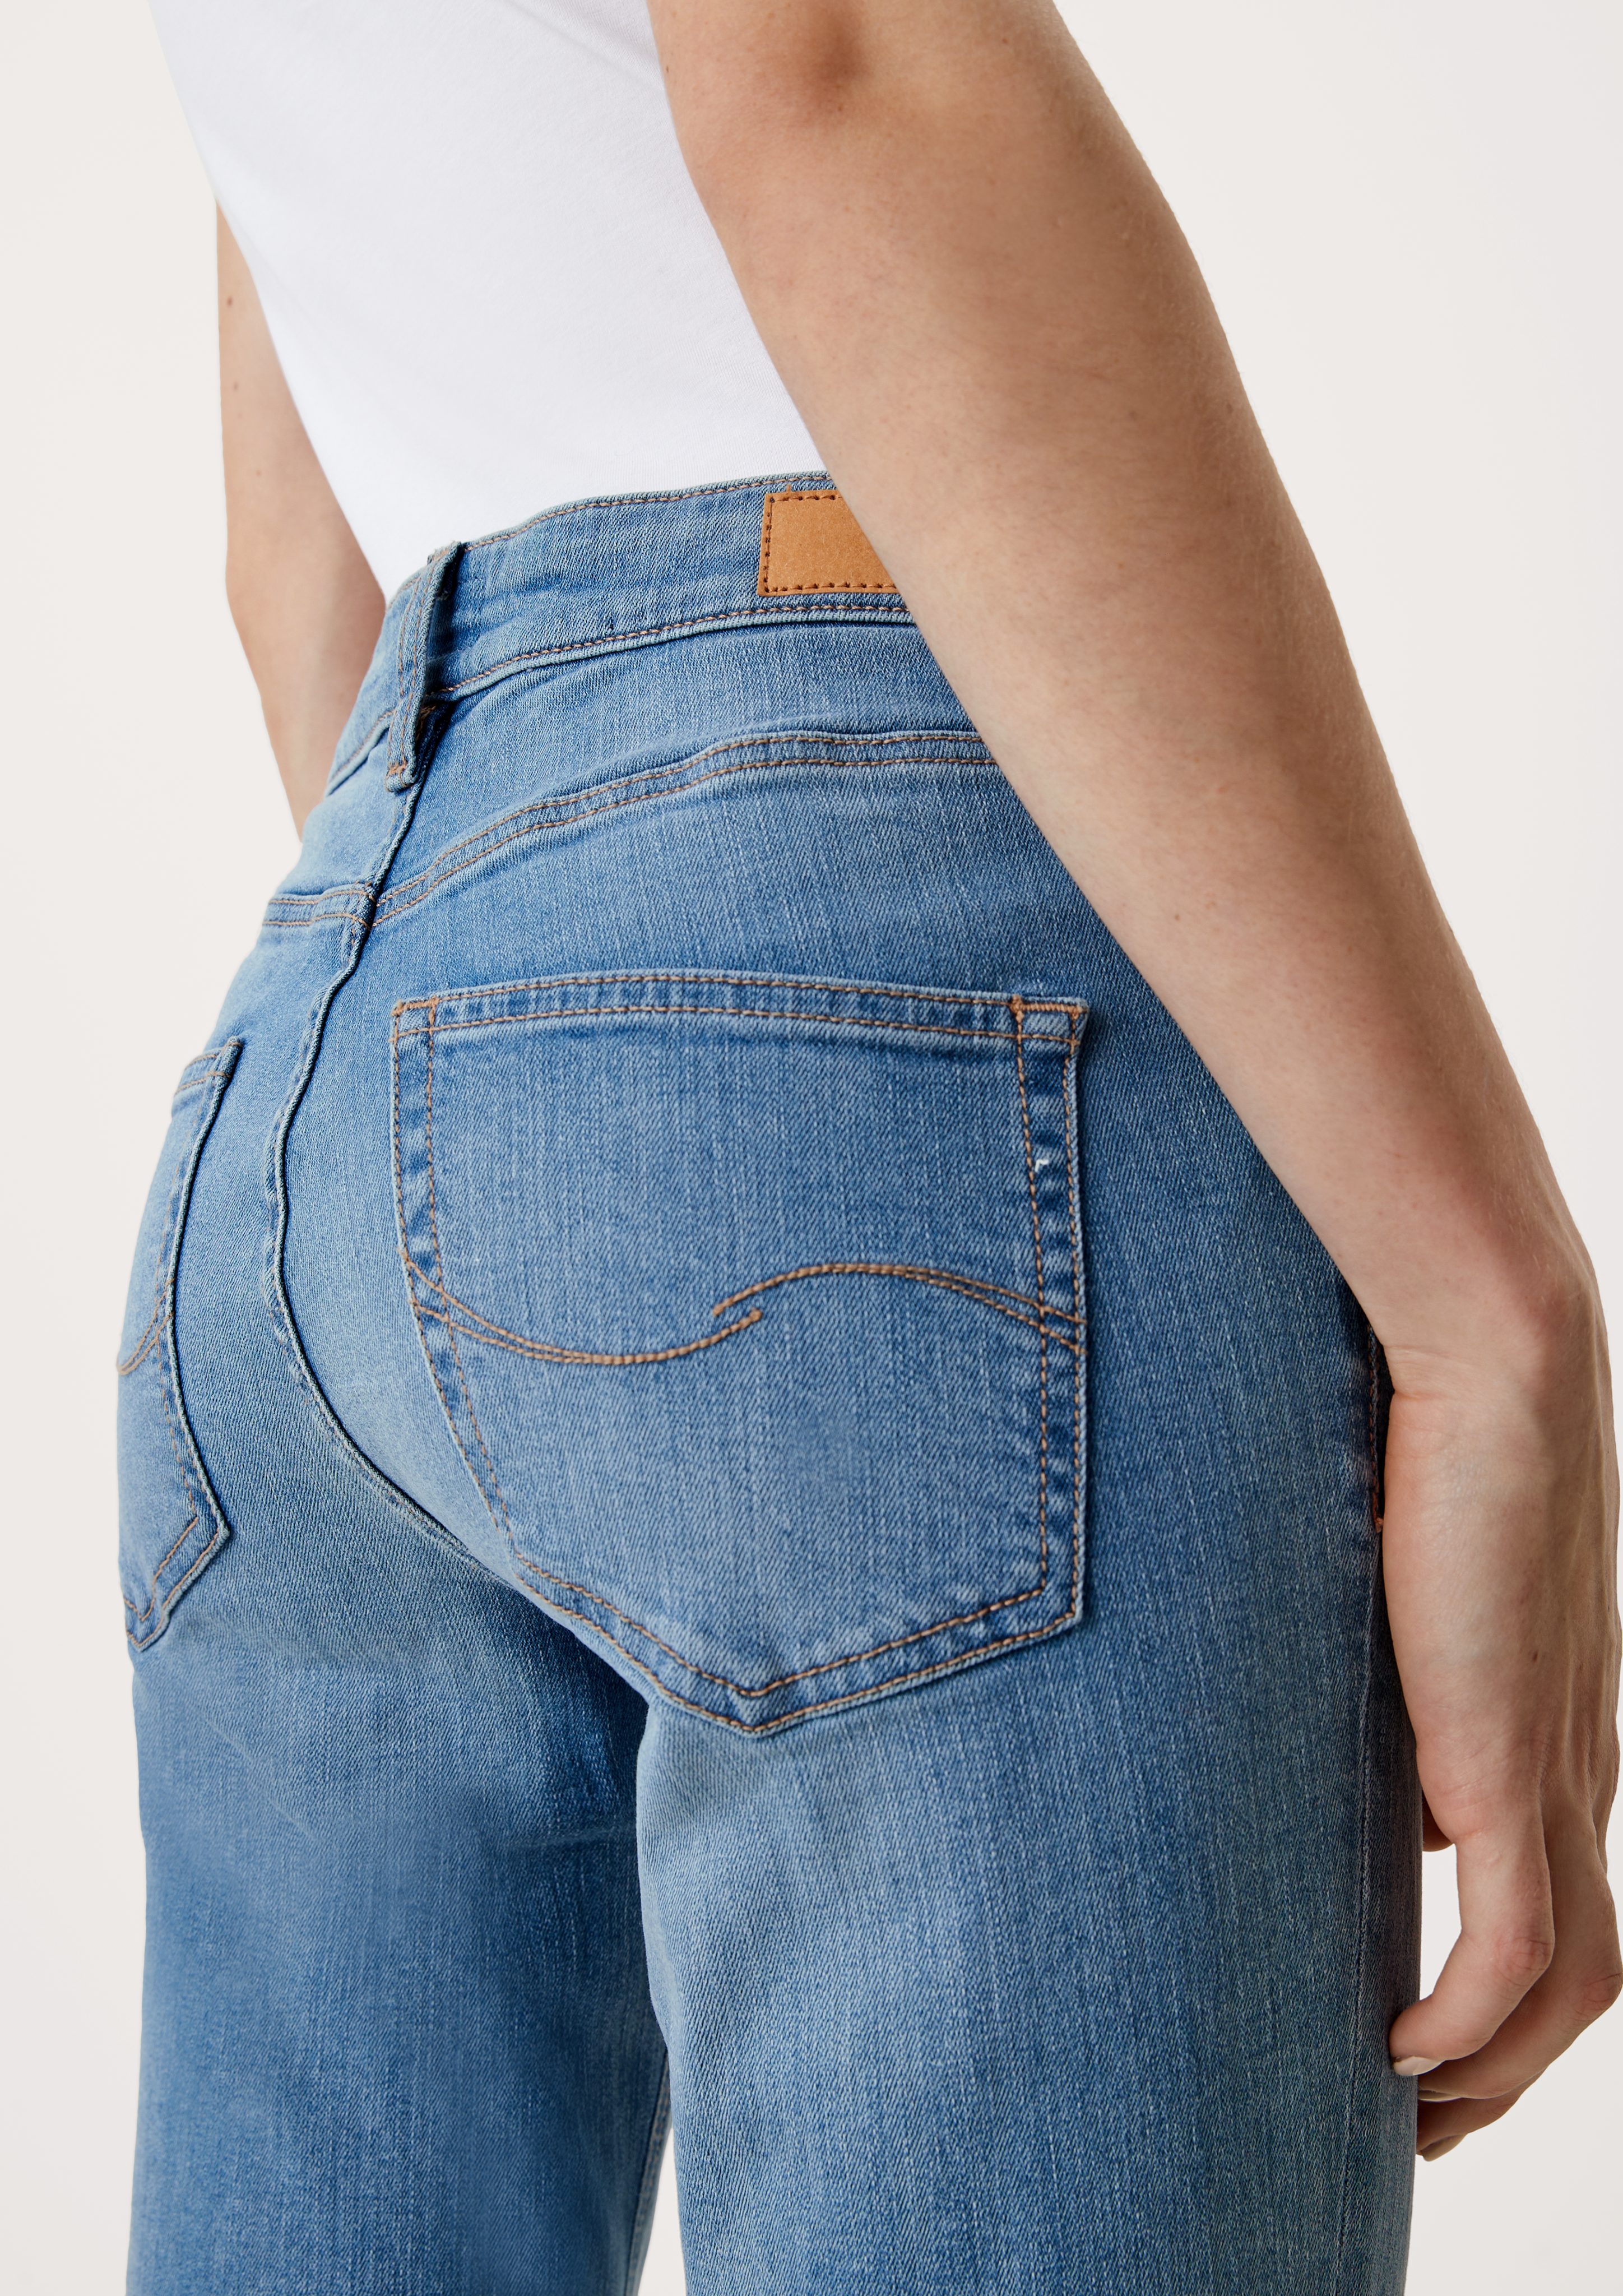 Jeans / Rise Stoffhose Waschung QS Skinny Sadie / / Mid Fit Leg Skinny himmelblau